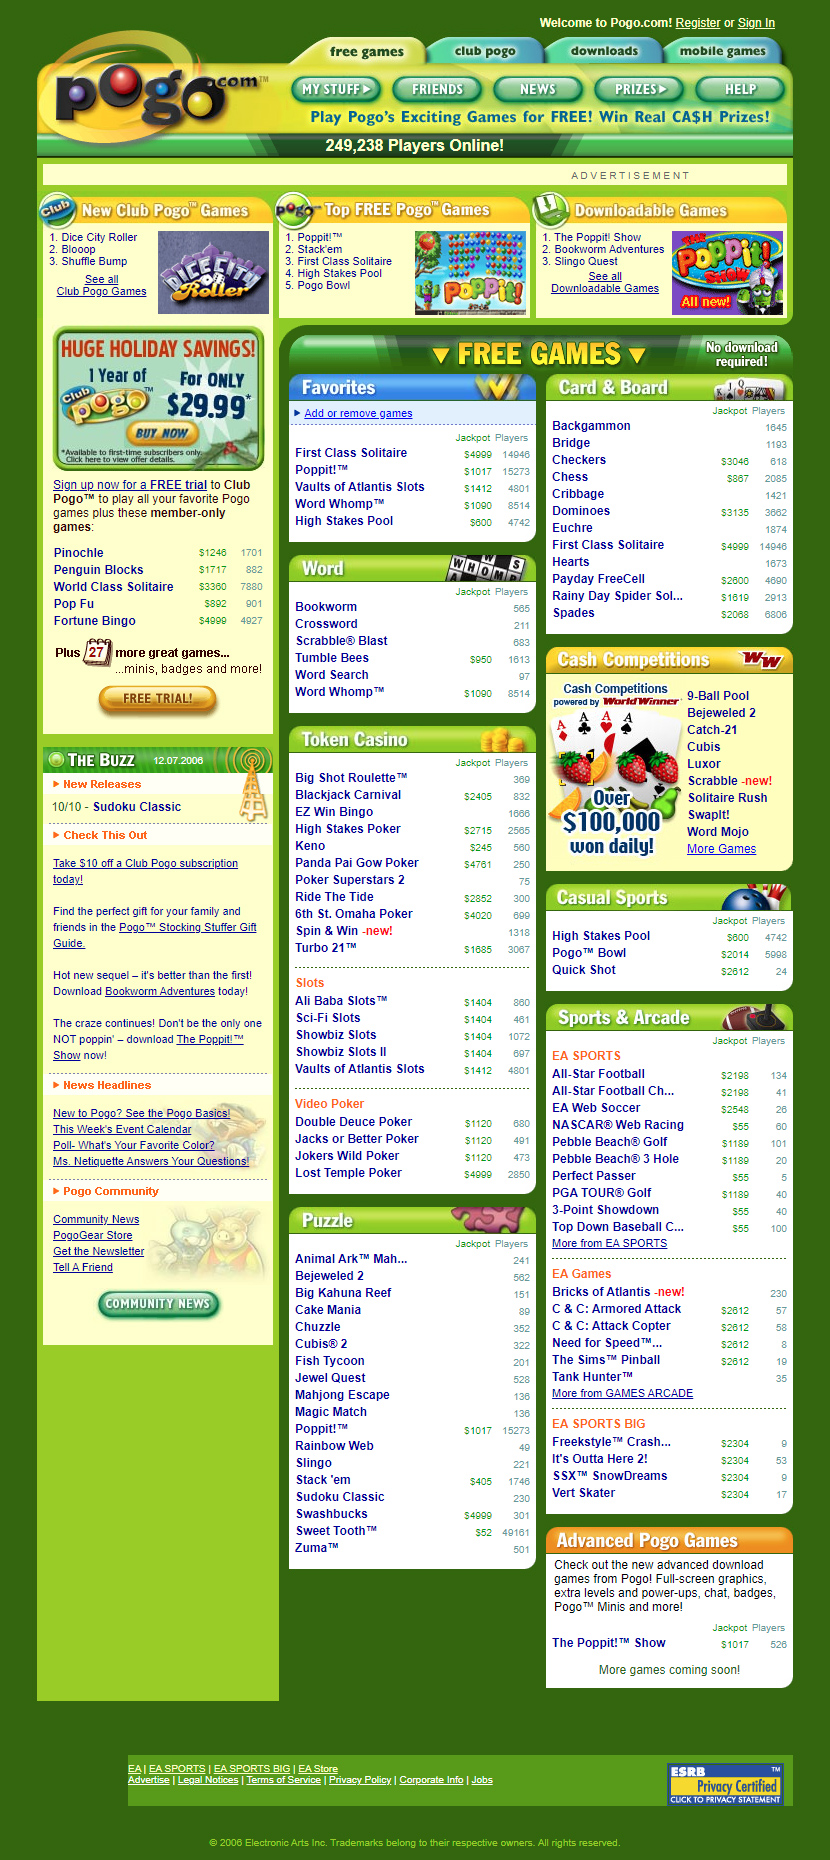 Pogo.com website in 2006